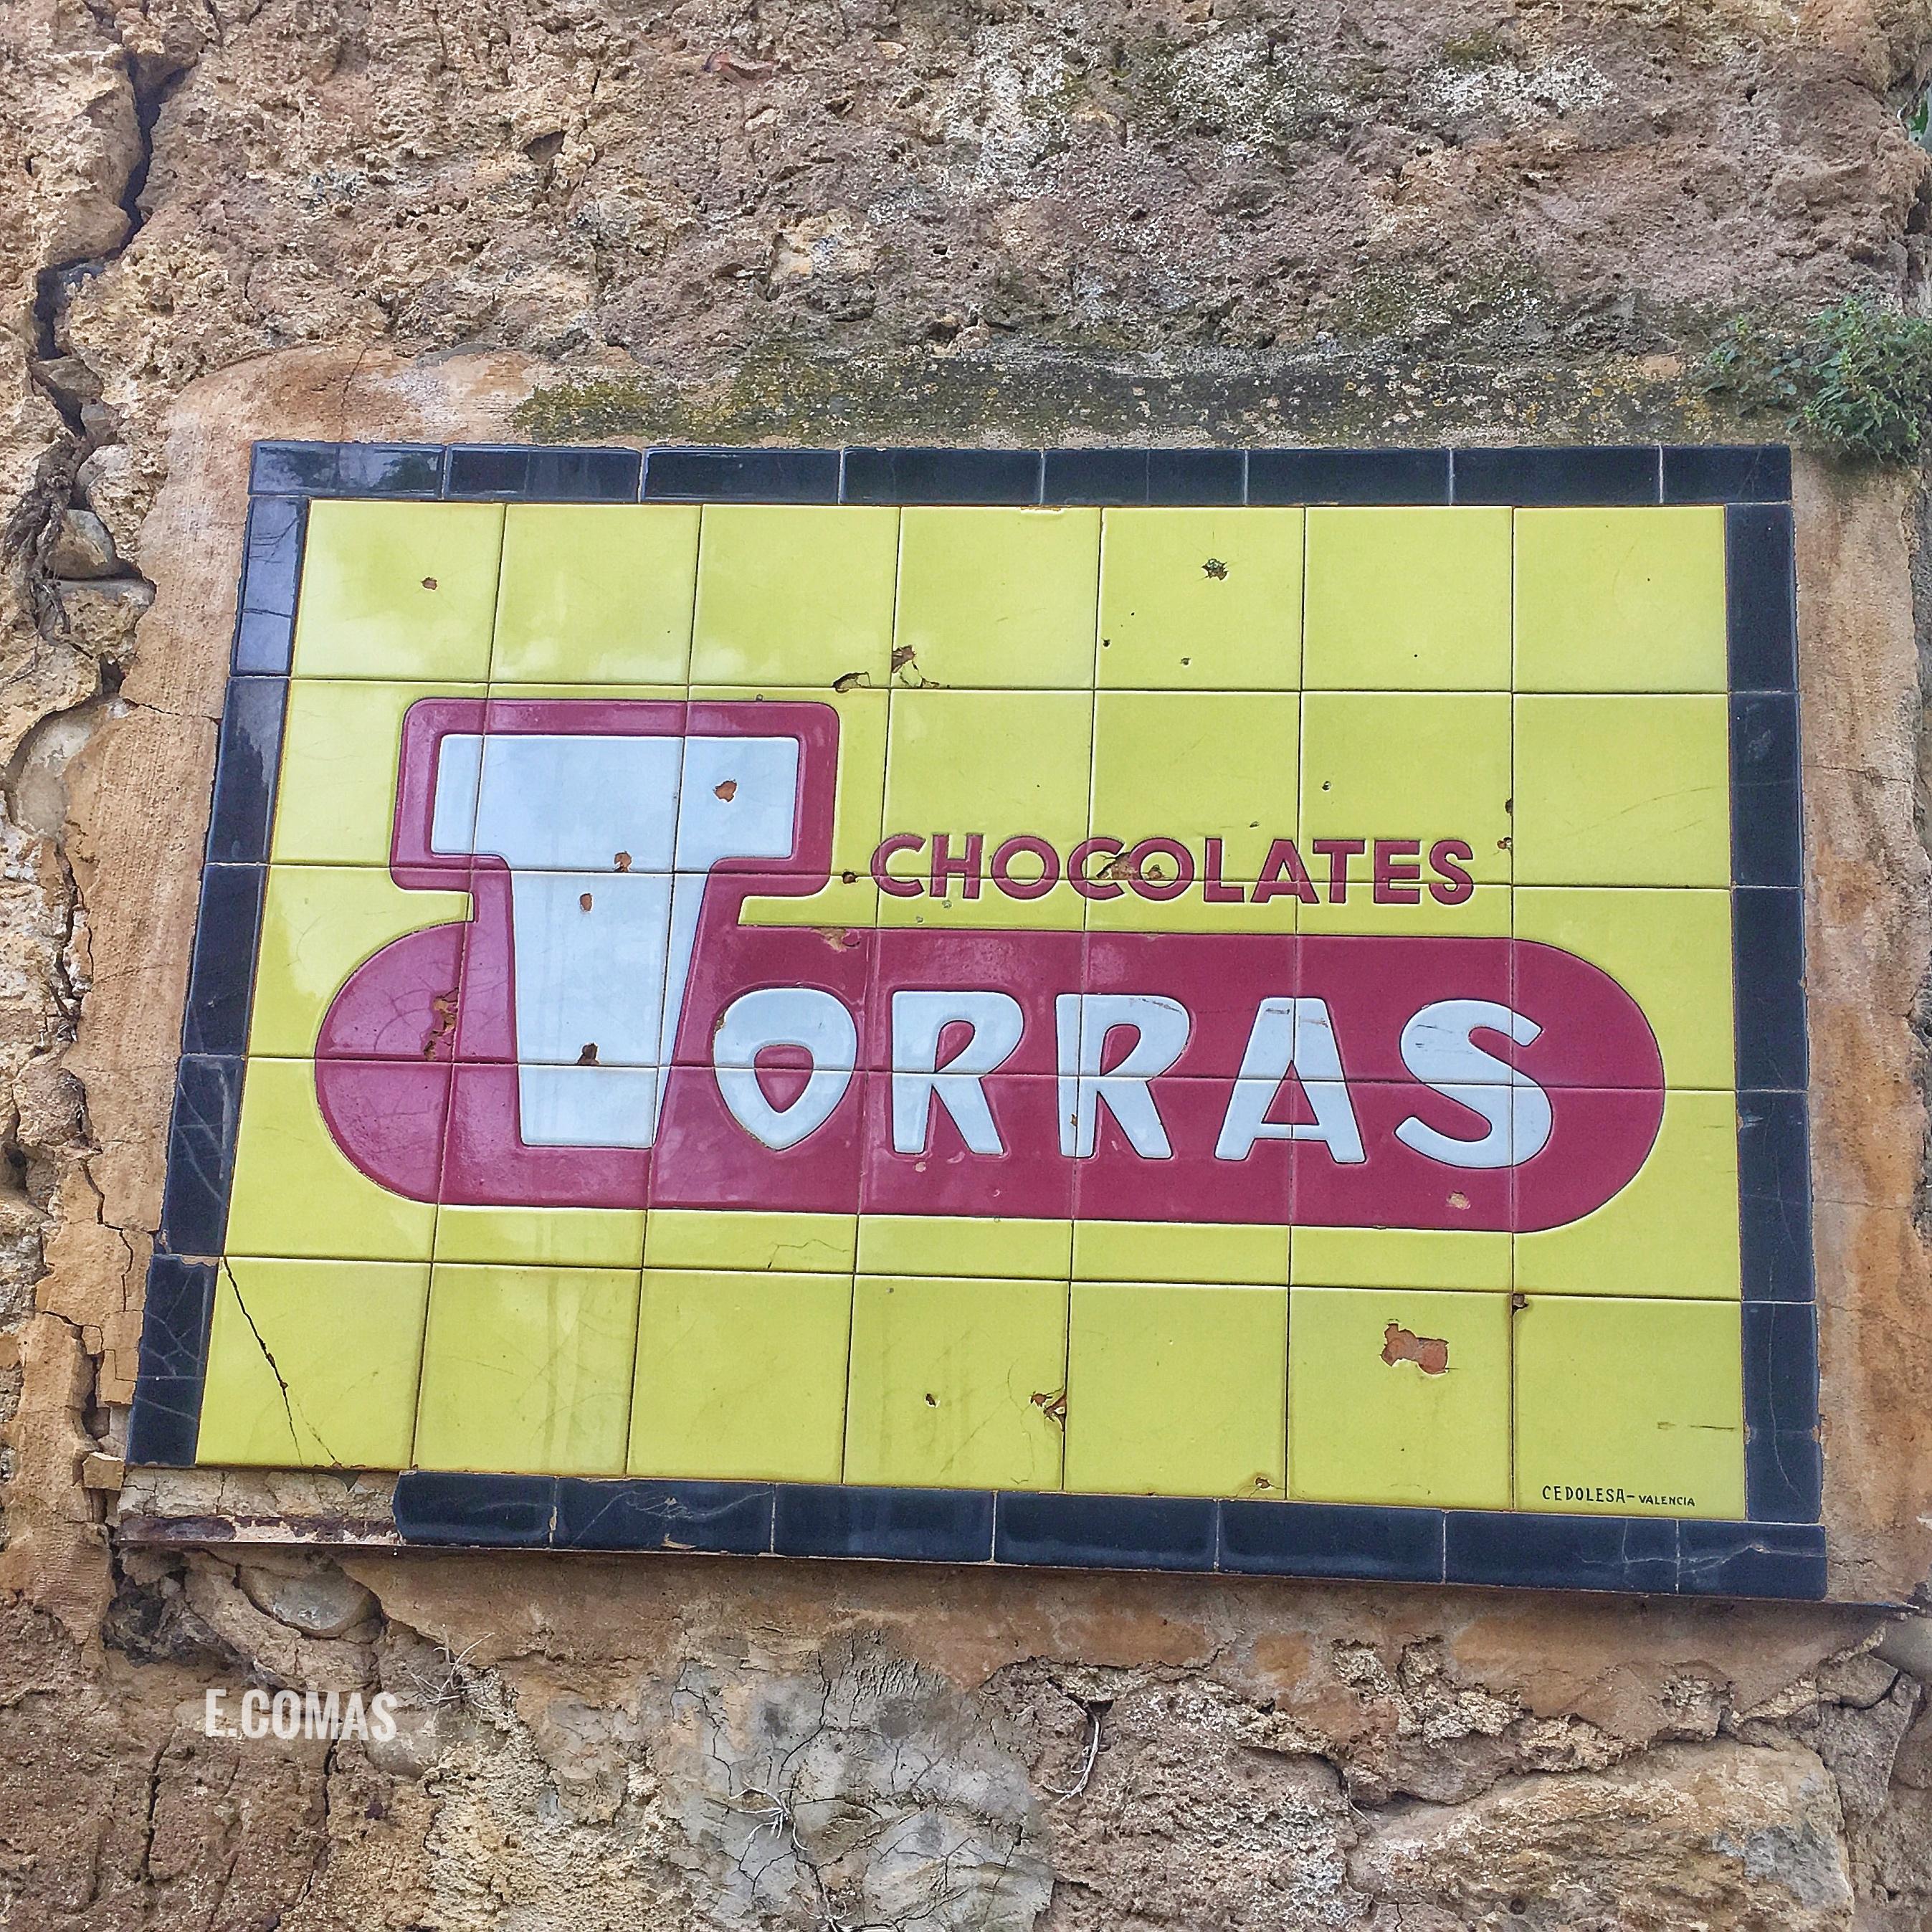 La campanya publicitària de Chocolates Torras